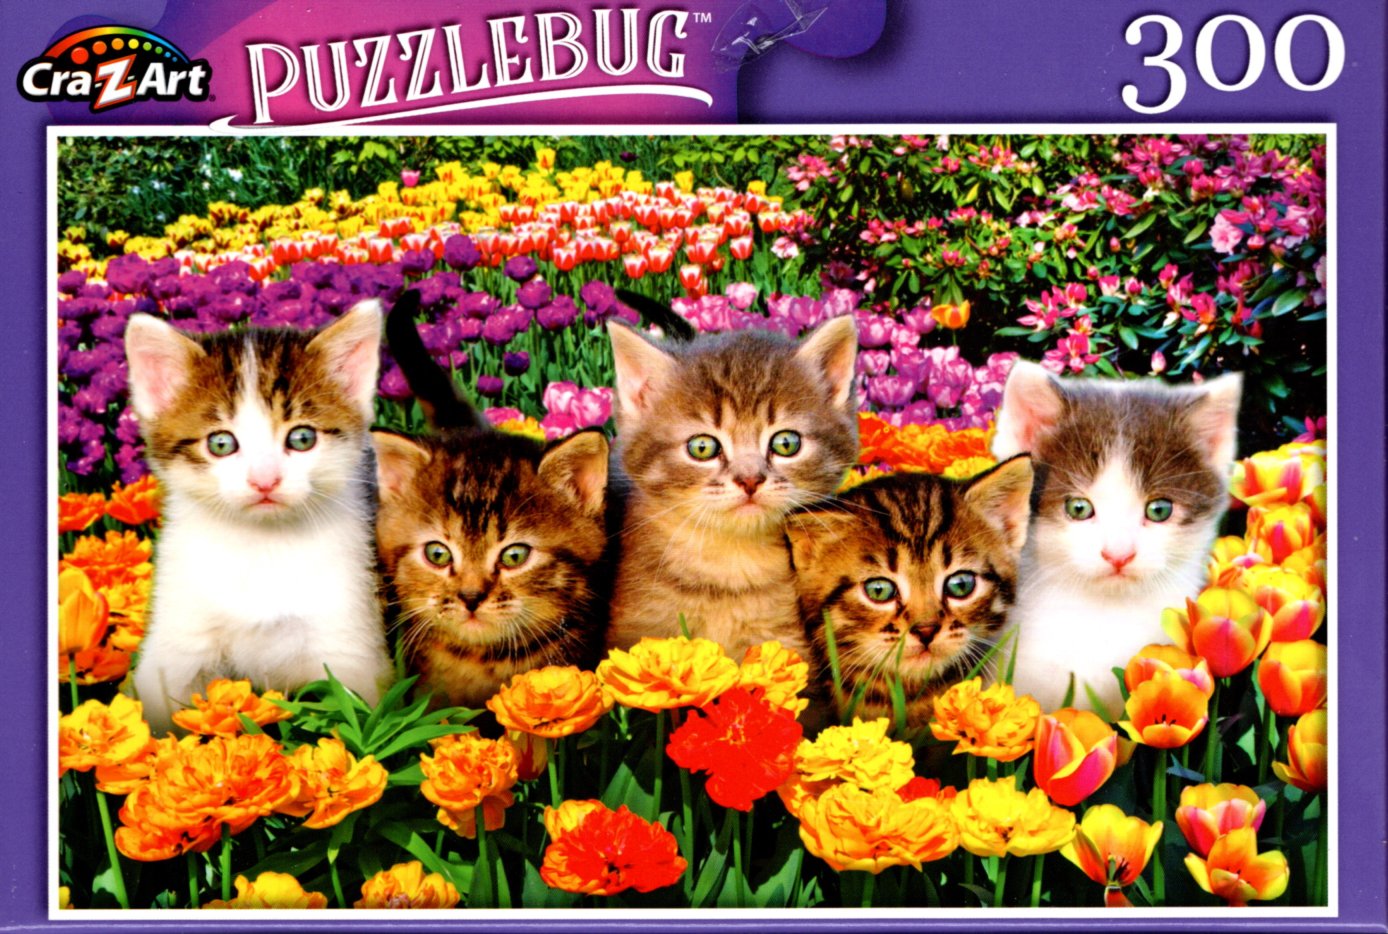 NEW Puzzlebug 300 Piece Jigsaw Puzzle ~ Three Little Kittens